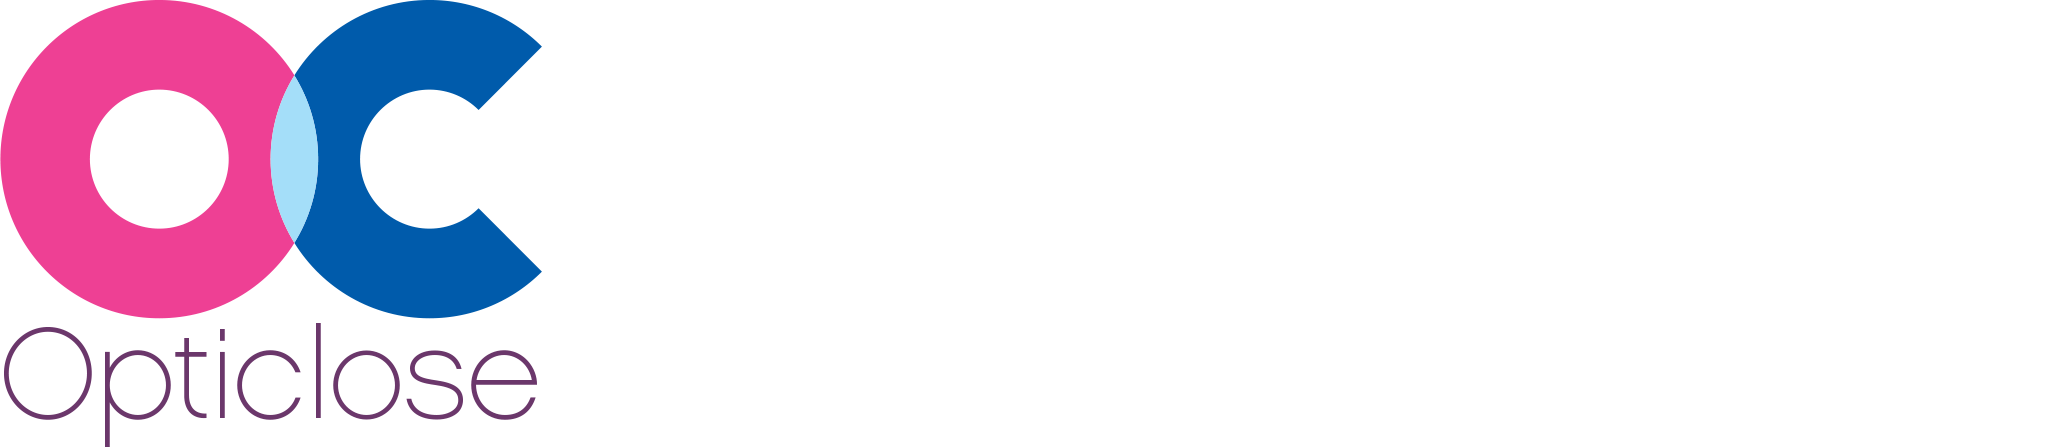 Opticlose logo